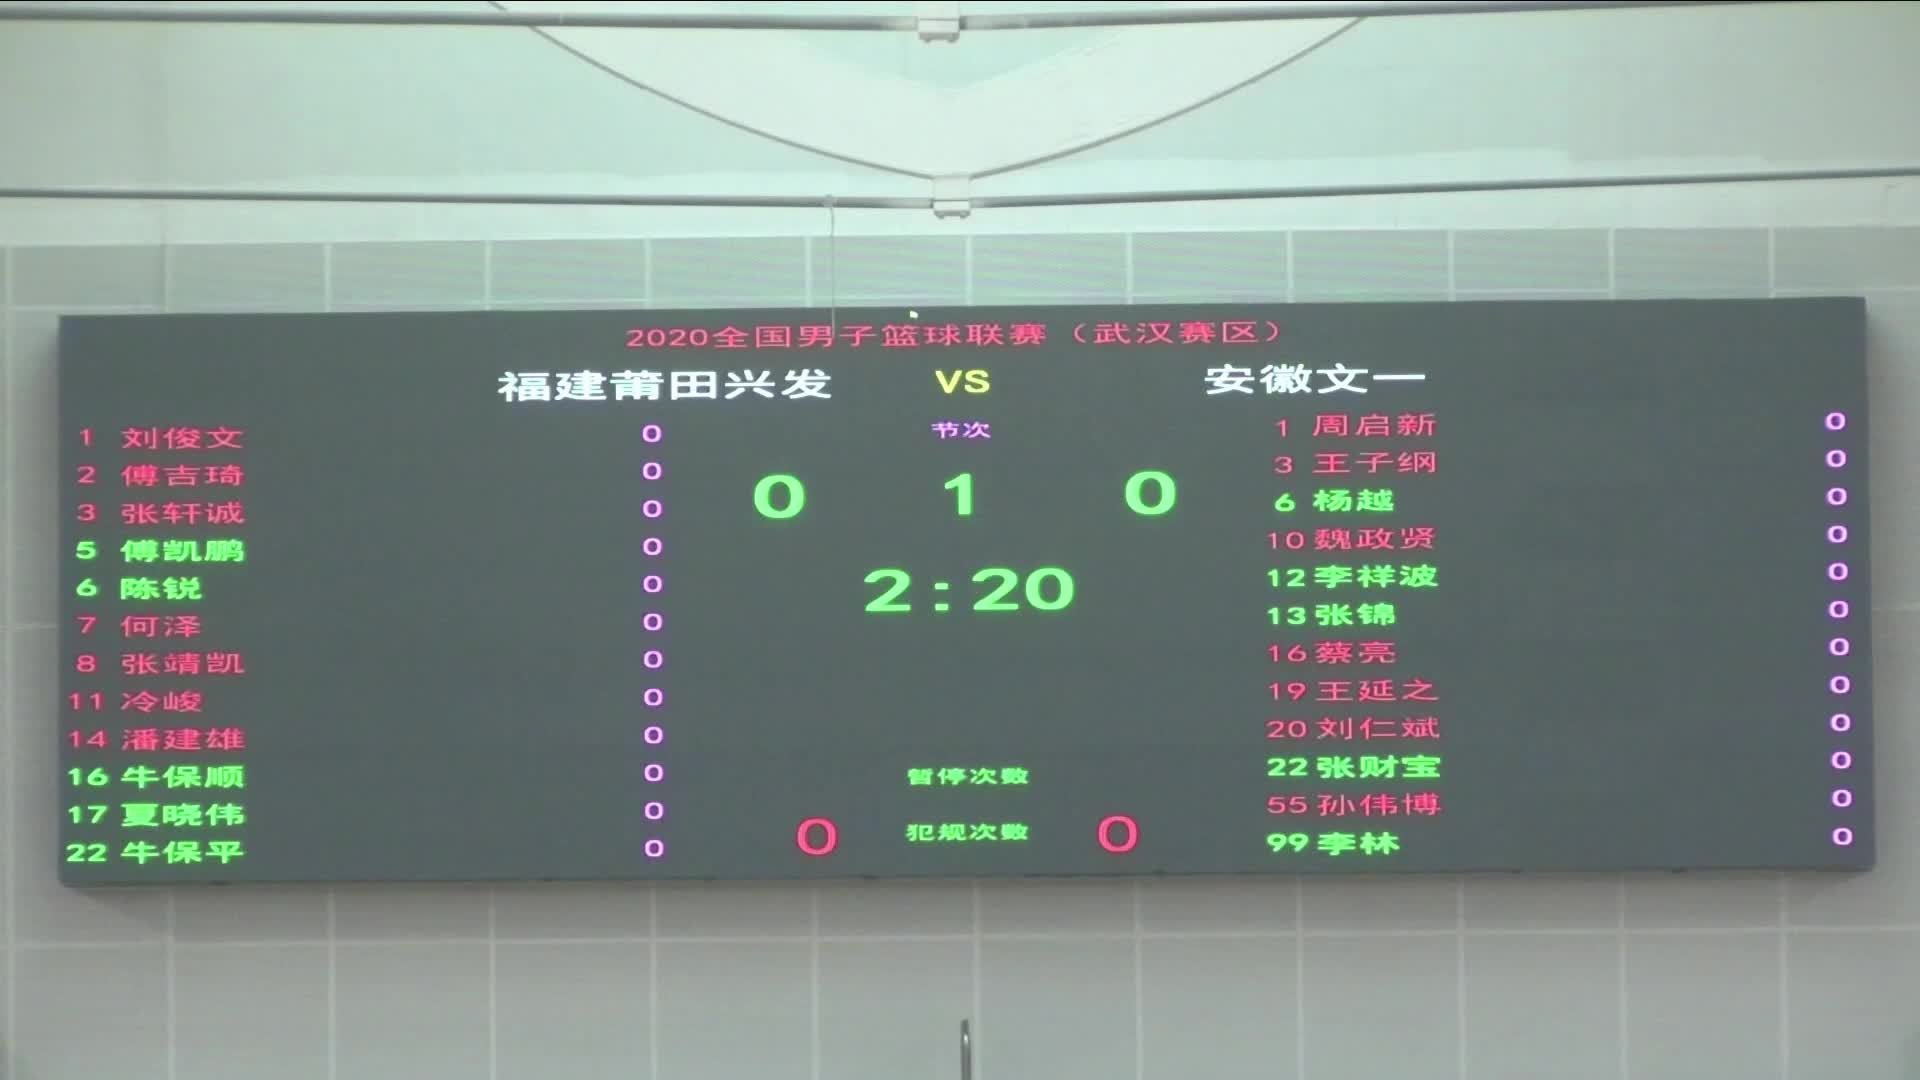 莆田vs安徽 NBL篮球联赛110802